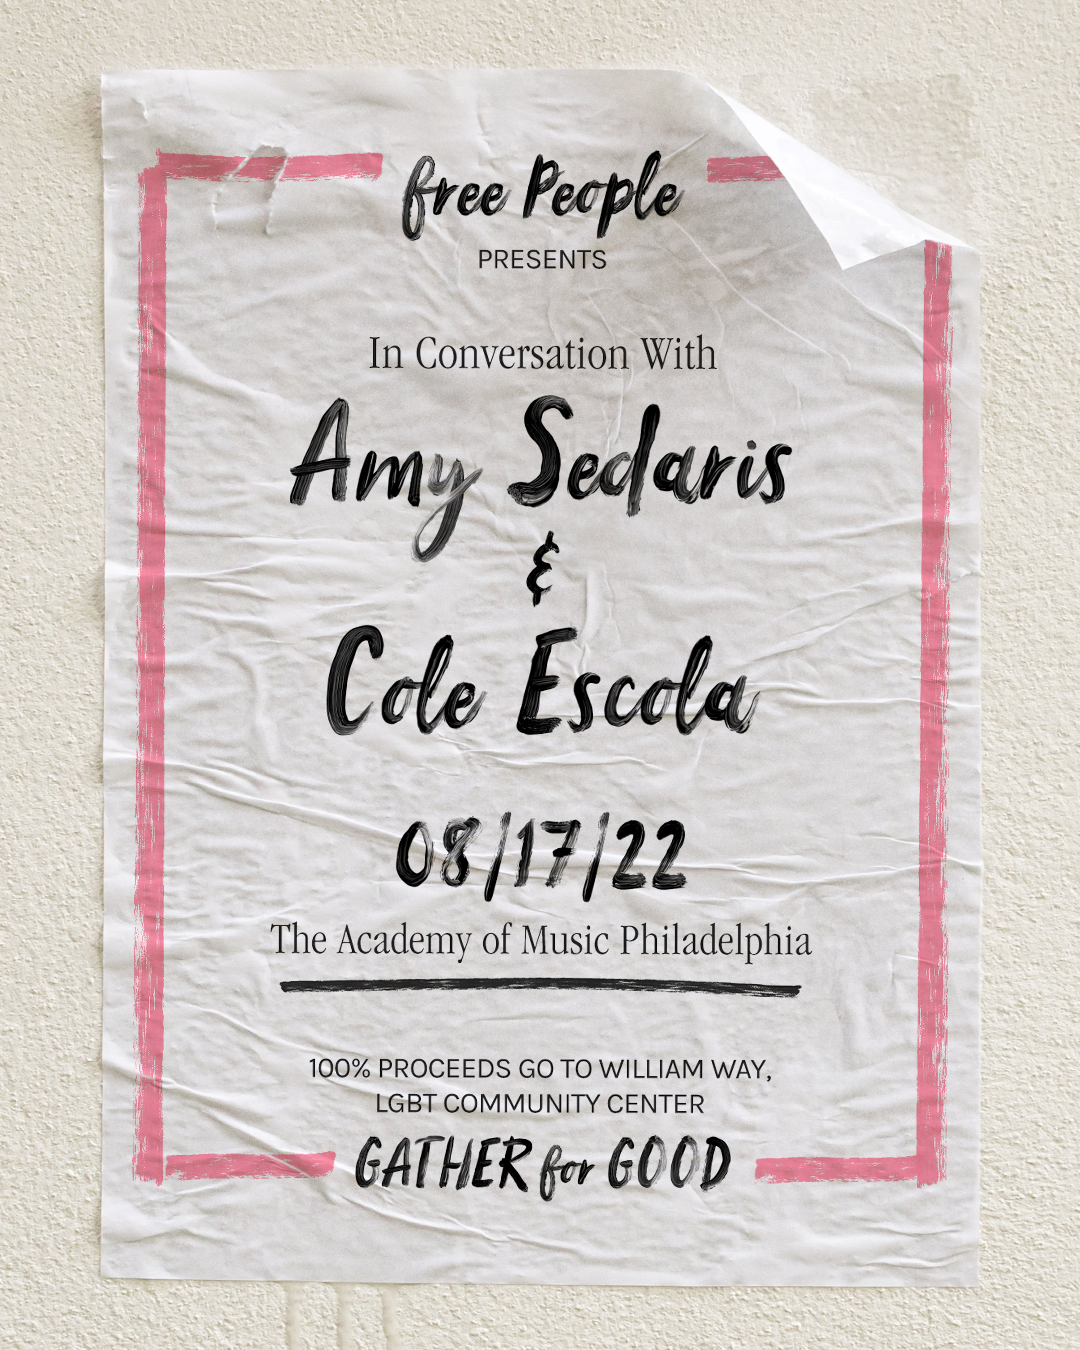 Gather for Good: Amy Sedaris and Cole Escola